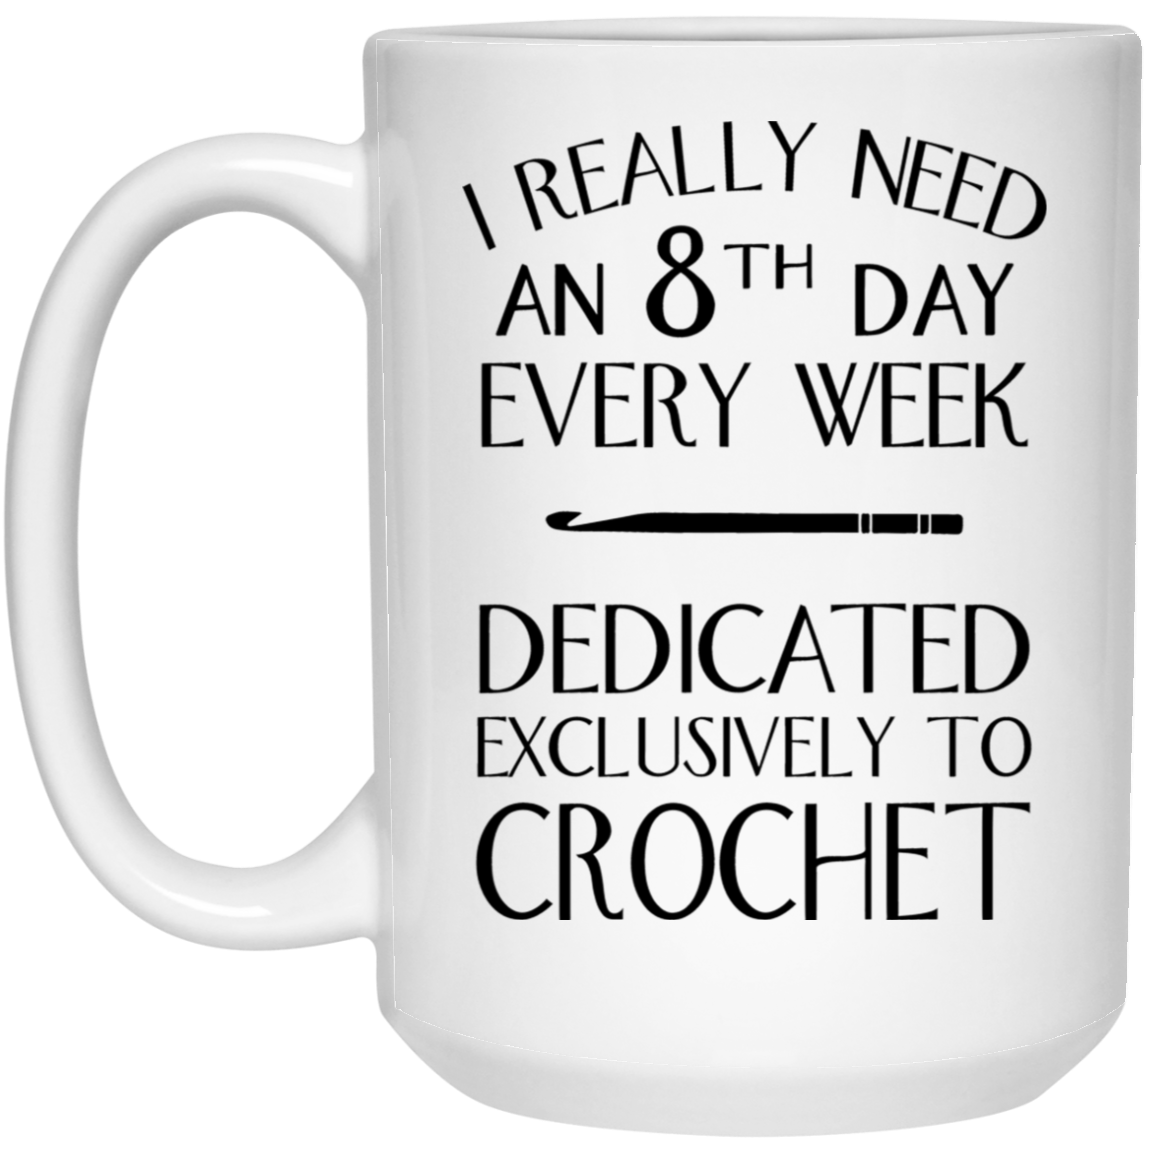 8th Day Crochet Mugs